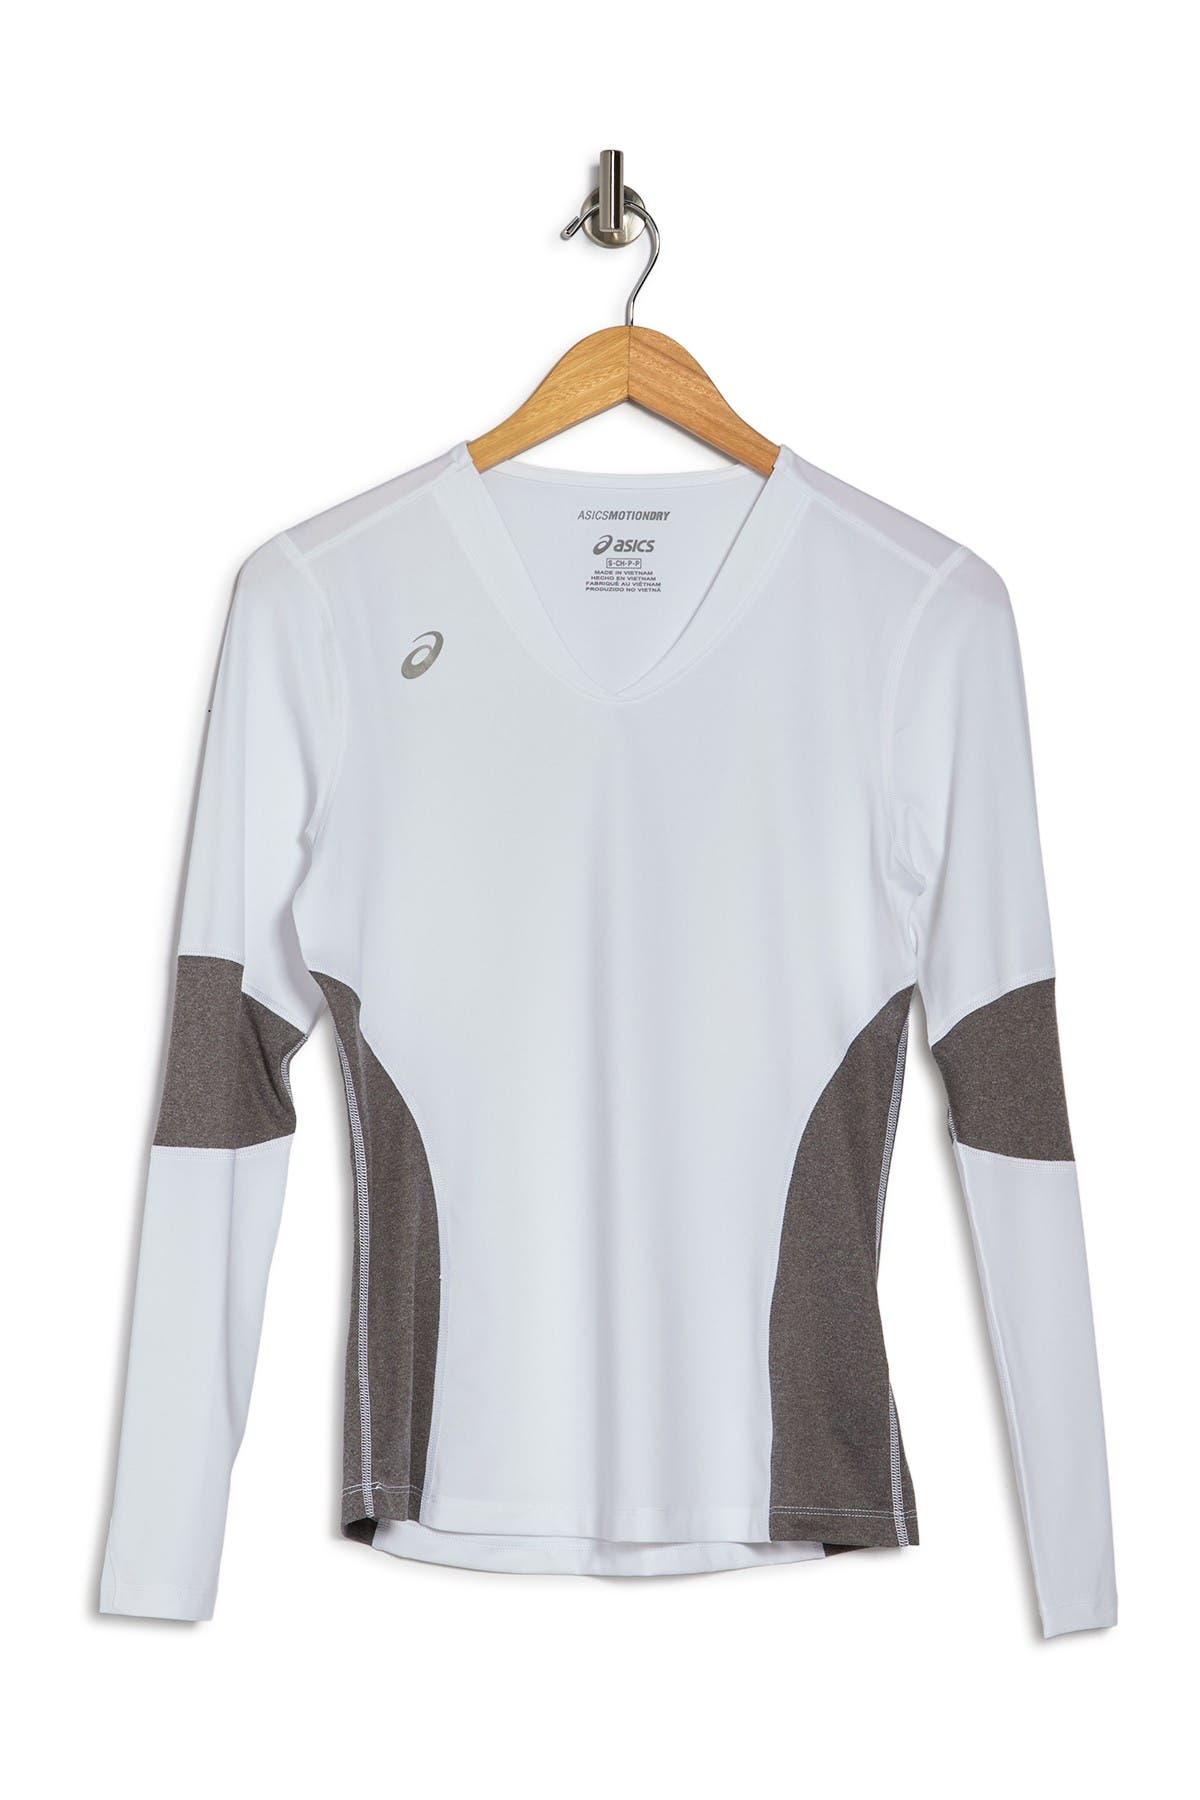 Asics Decoy Long Sleeve Jersey In White/heather Grey